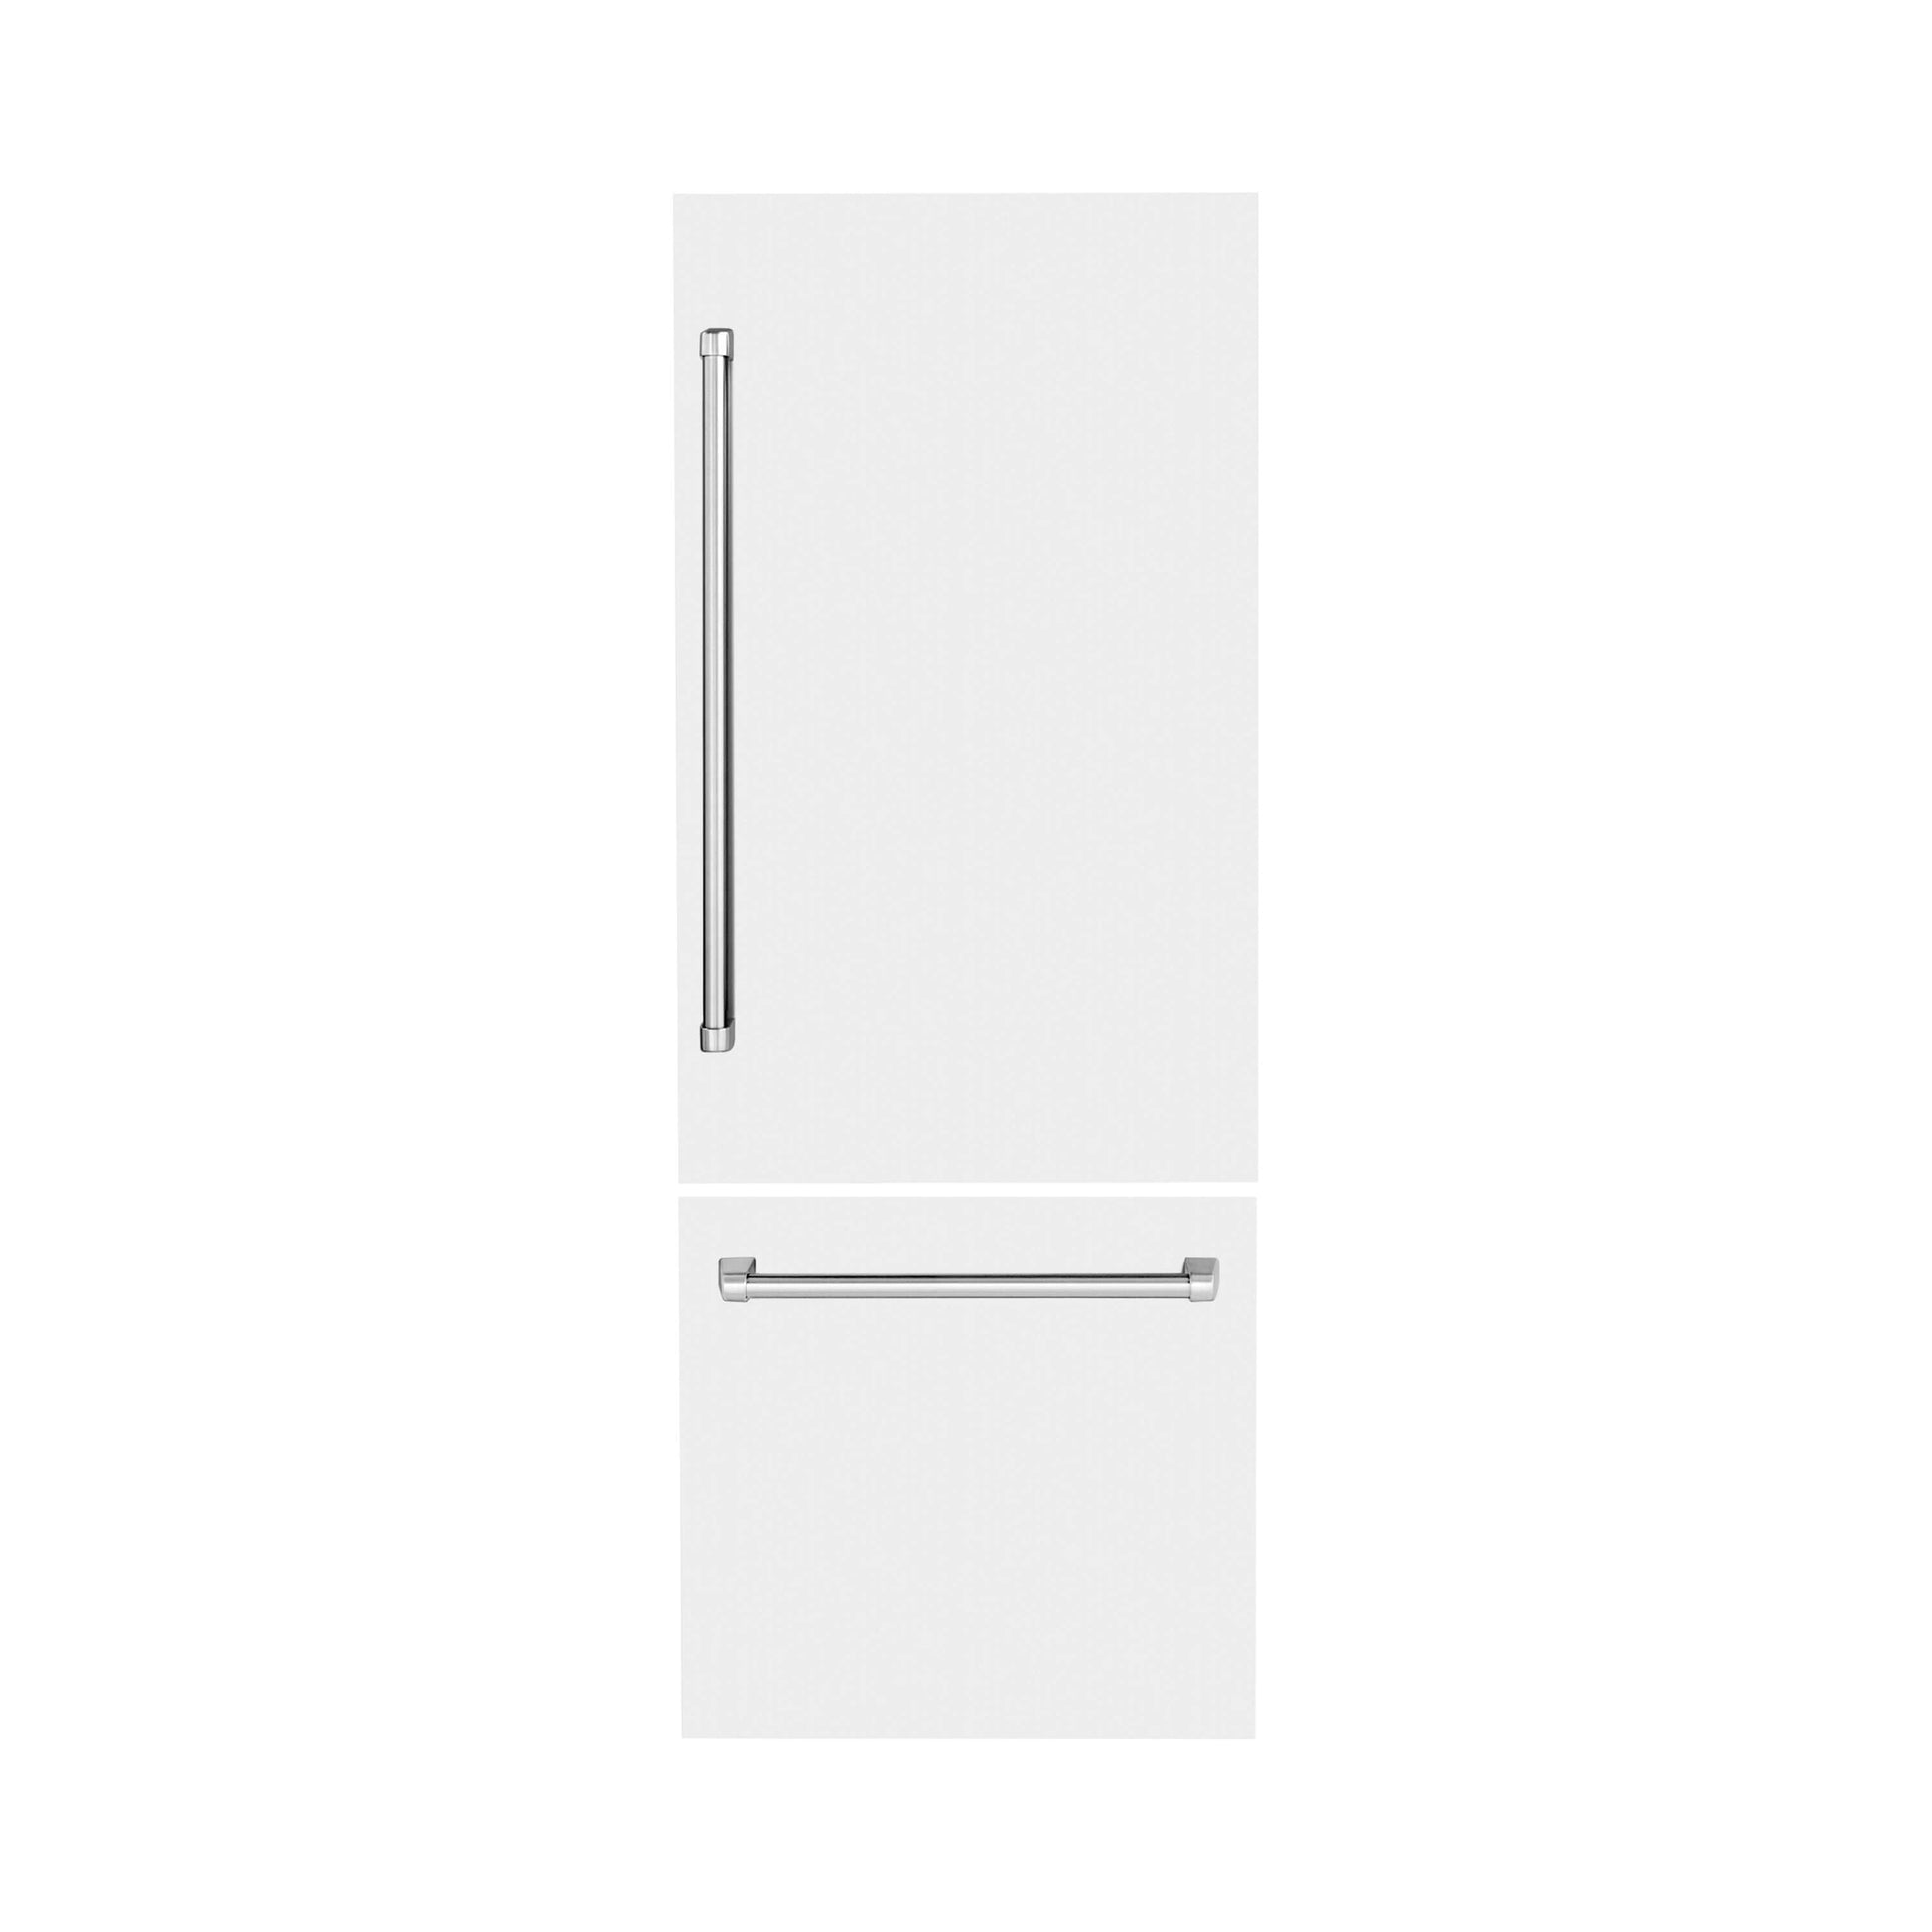 Panels & Handles Only - ZLINE 30" Refrigerator Panels in Matte White